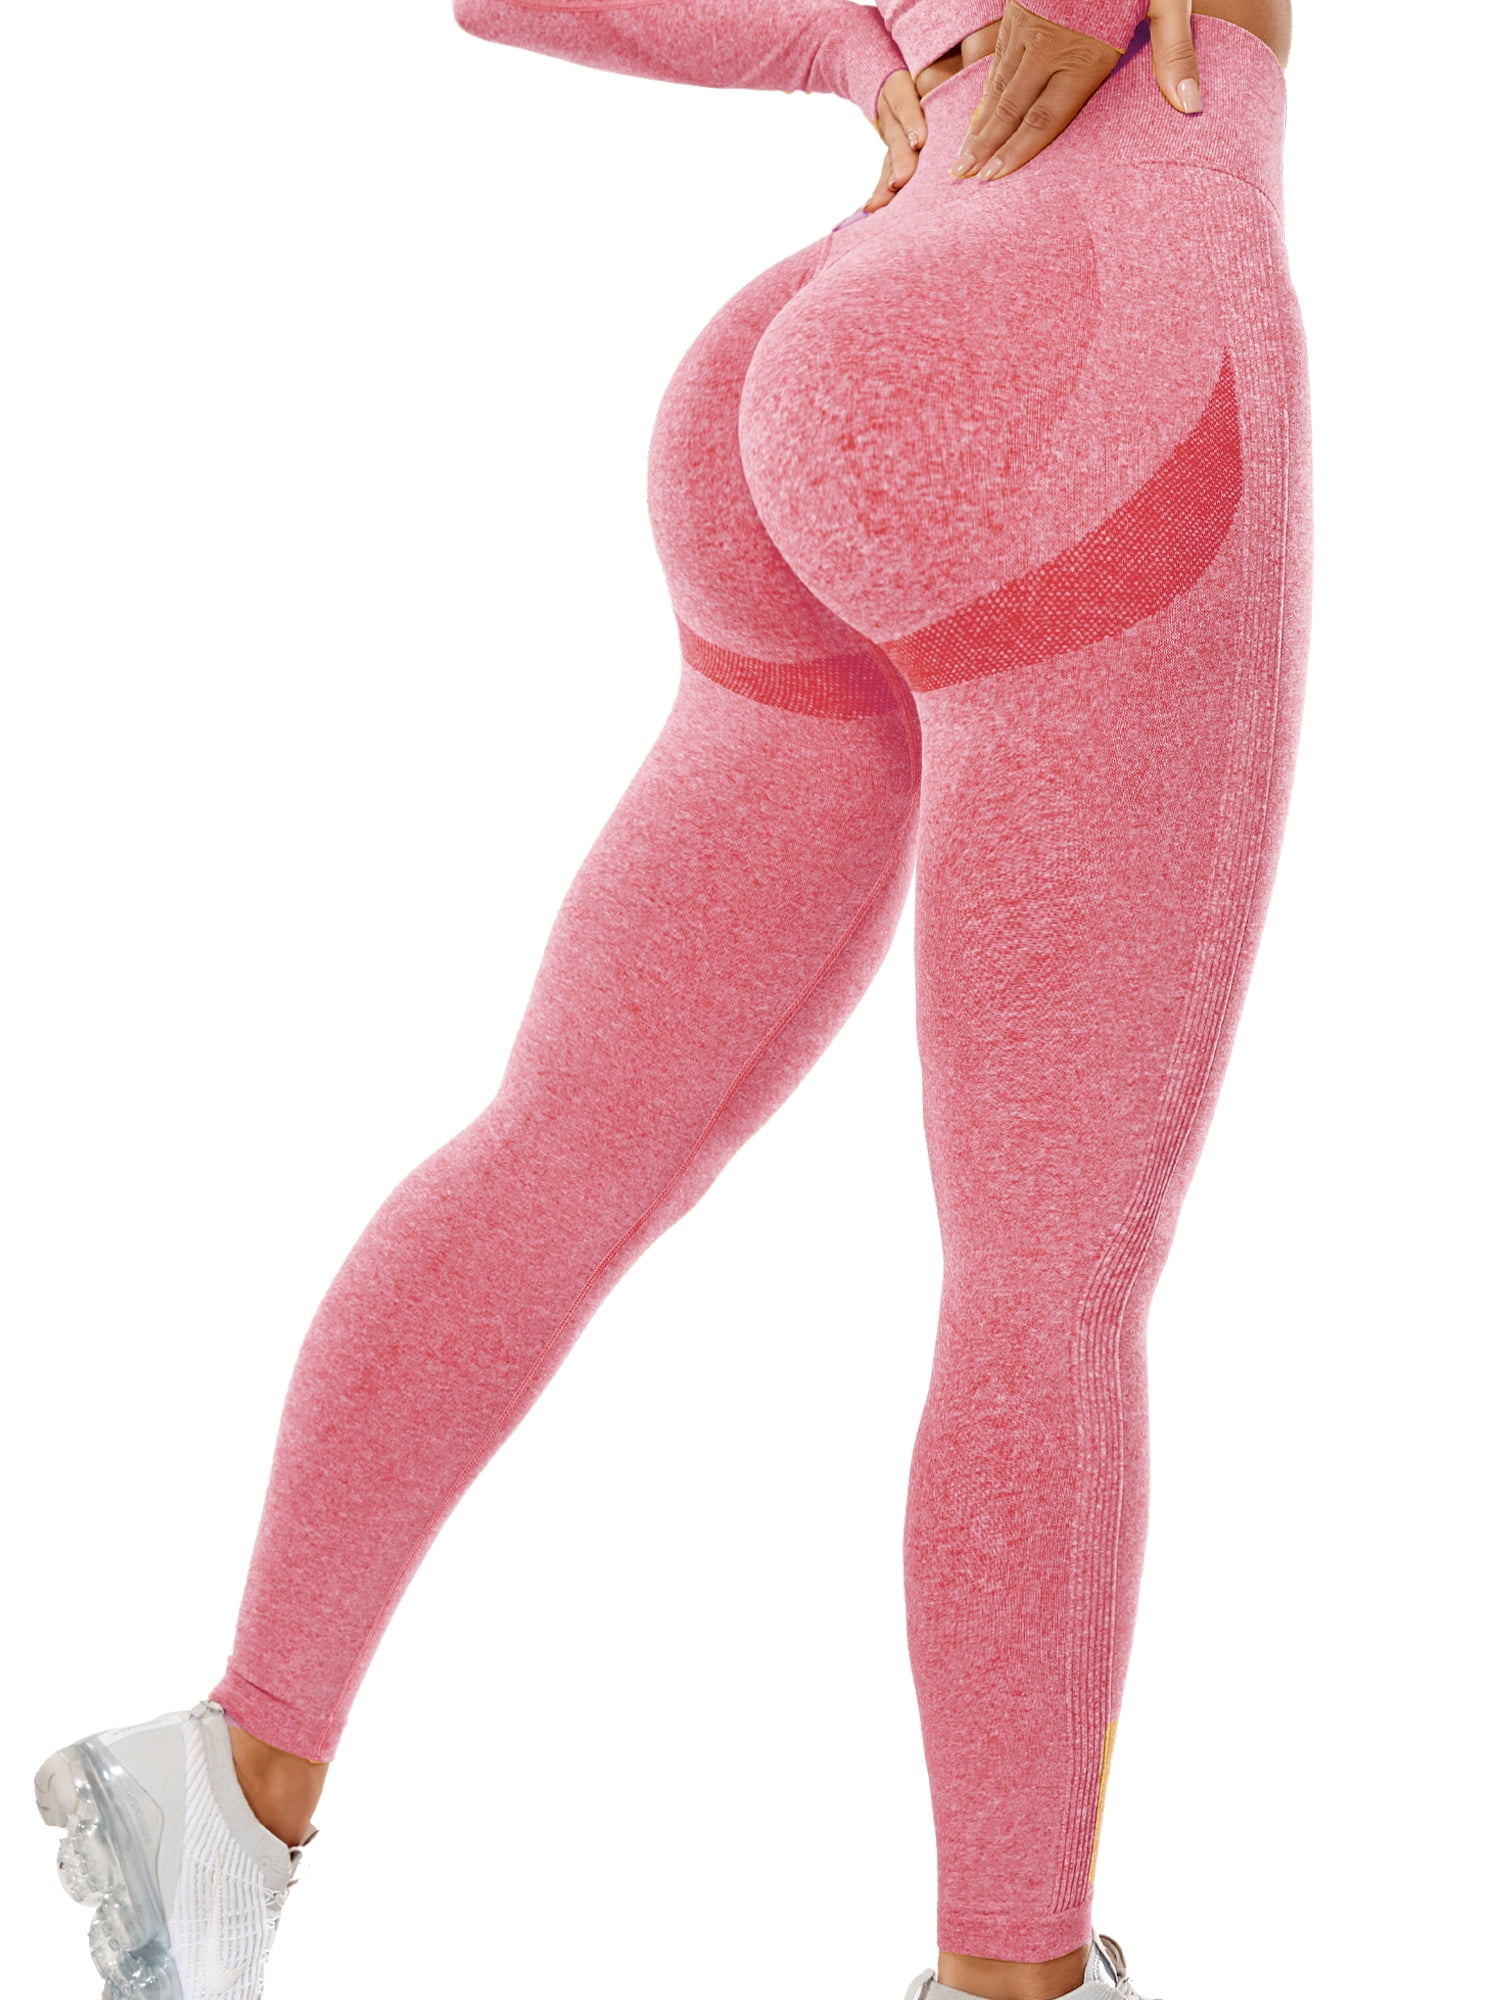 EHQJNJ Yoga Pants Petite Women Women Print Tights Leggings Control Yoga  Sport Leggings for Women High Waisted Leggings St Patricks Yoga Pants Plus  Size Bootcut 